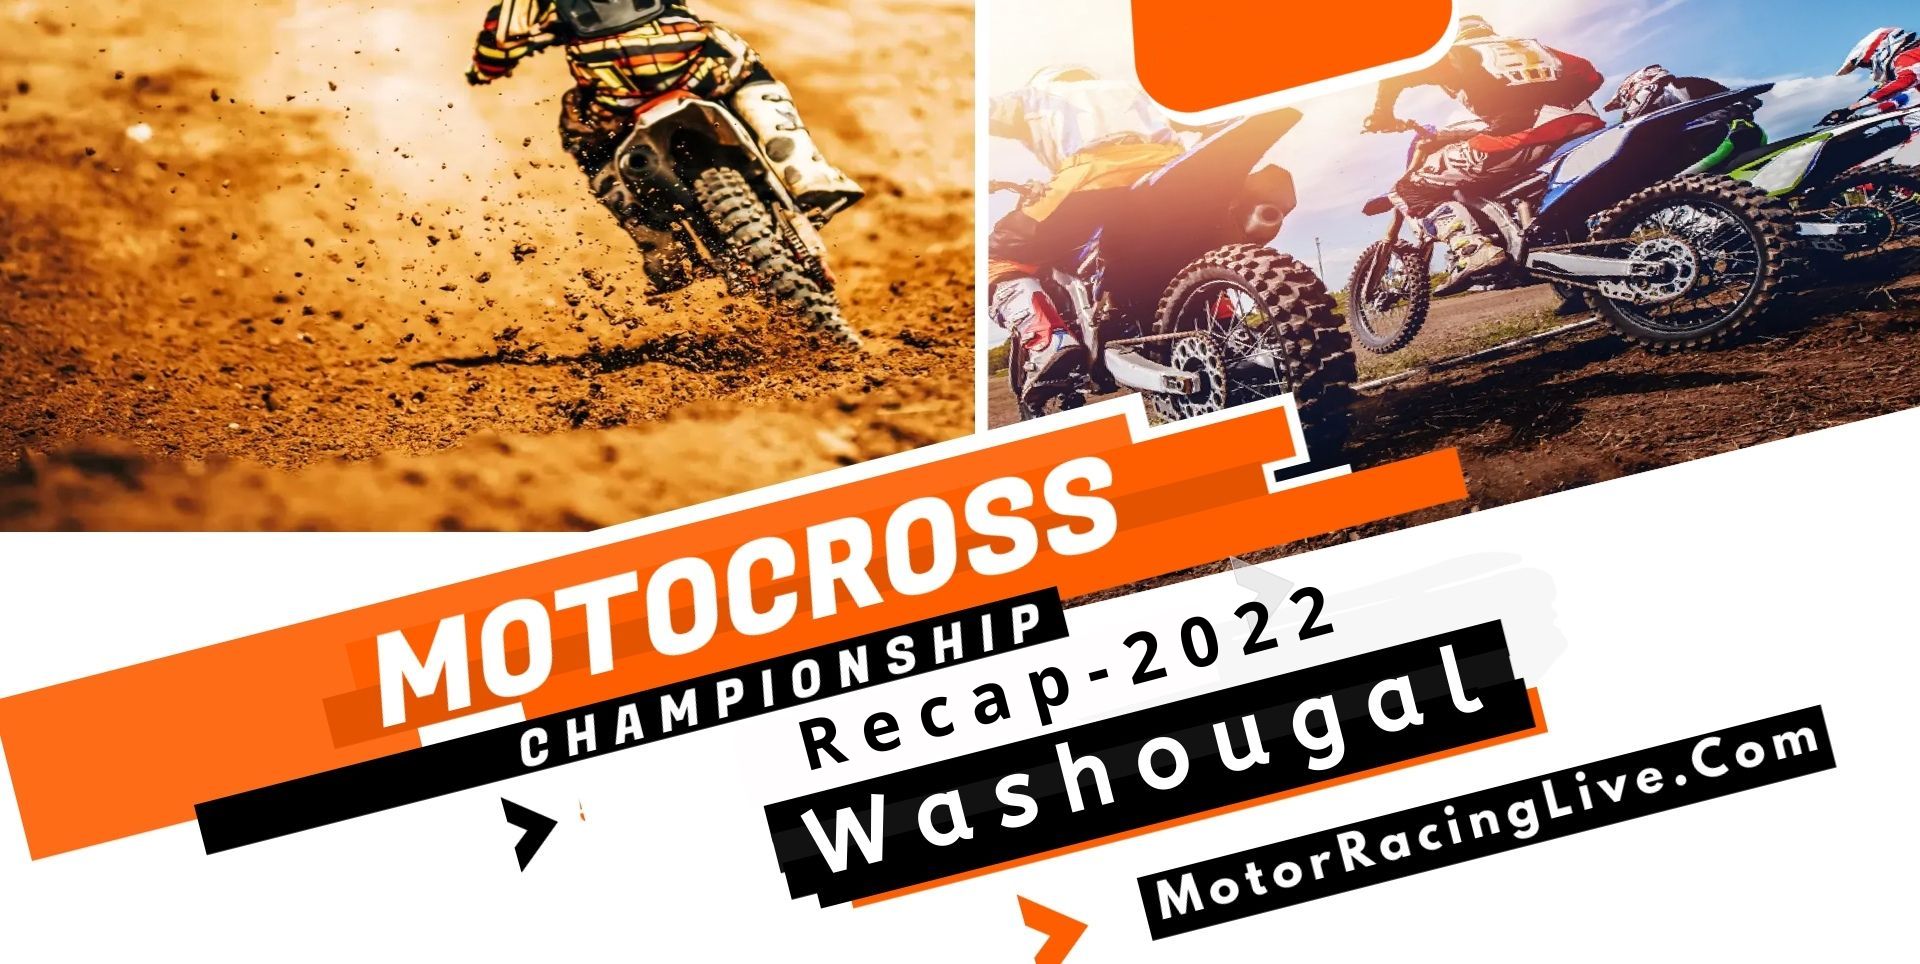 Washougal National Recap 2022 Motocross